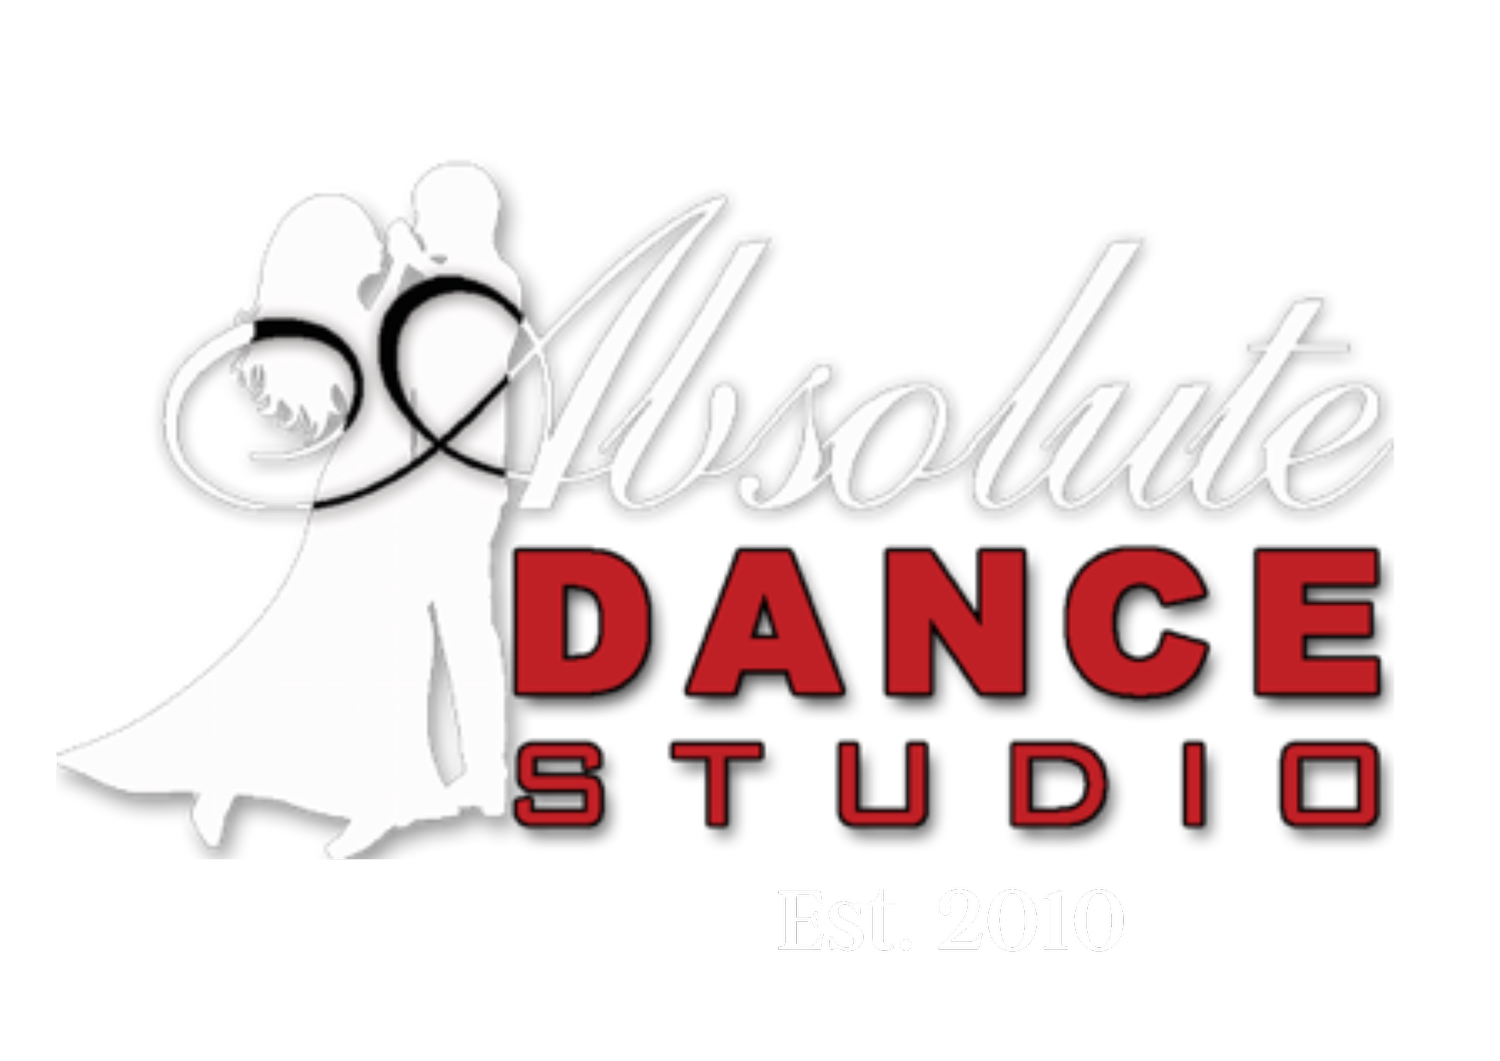 Absolute Dance Studio